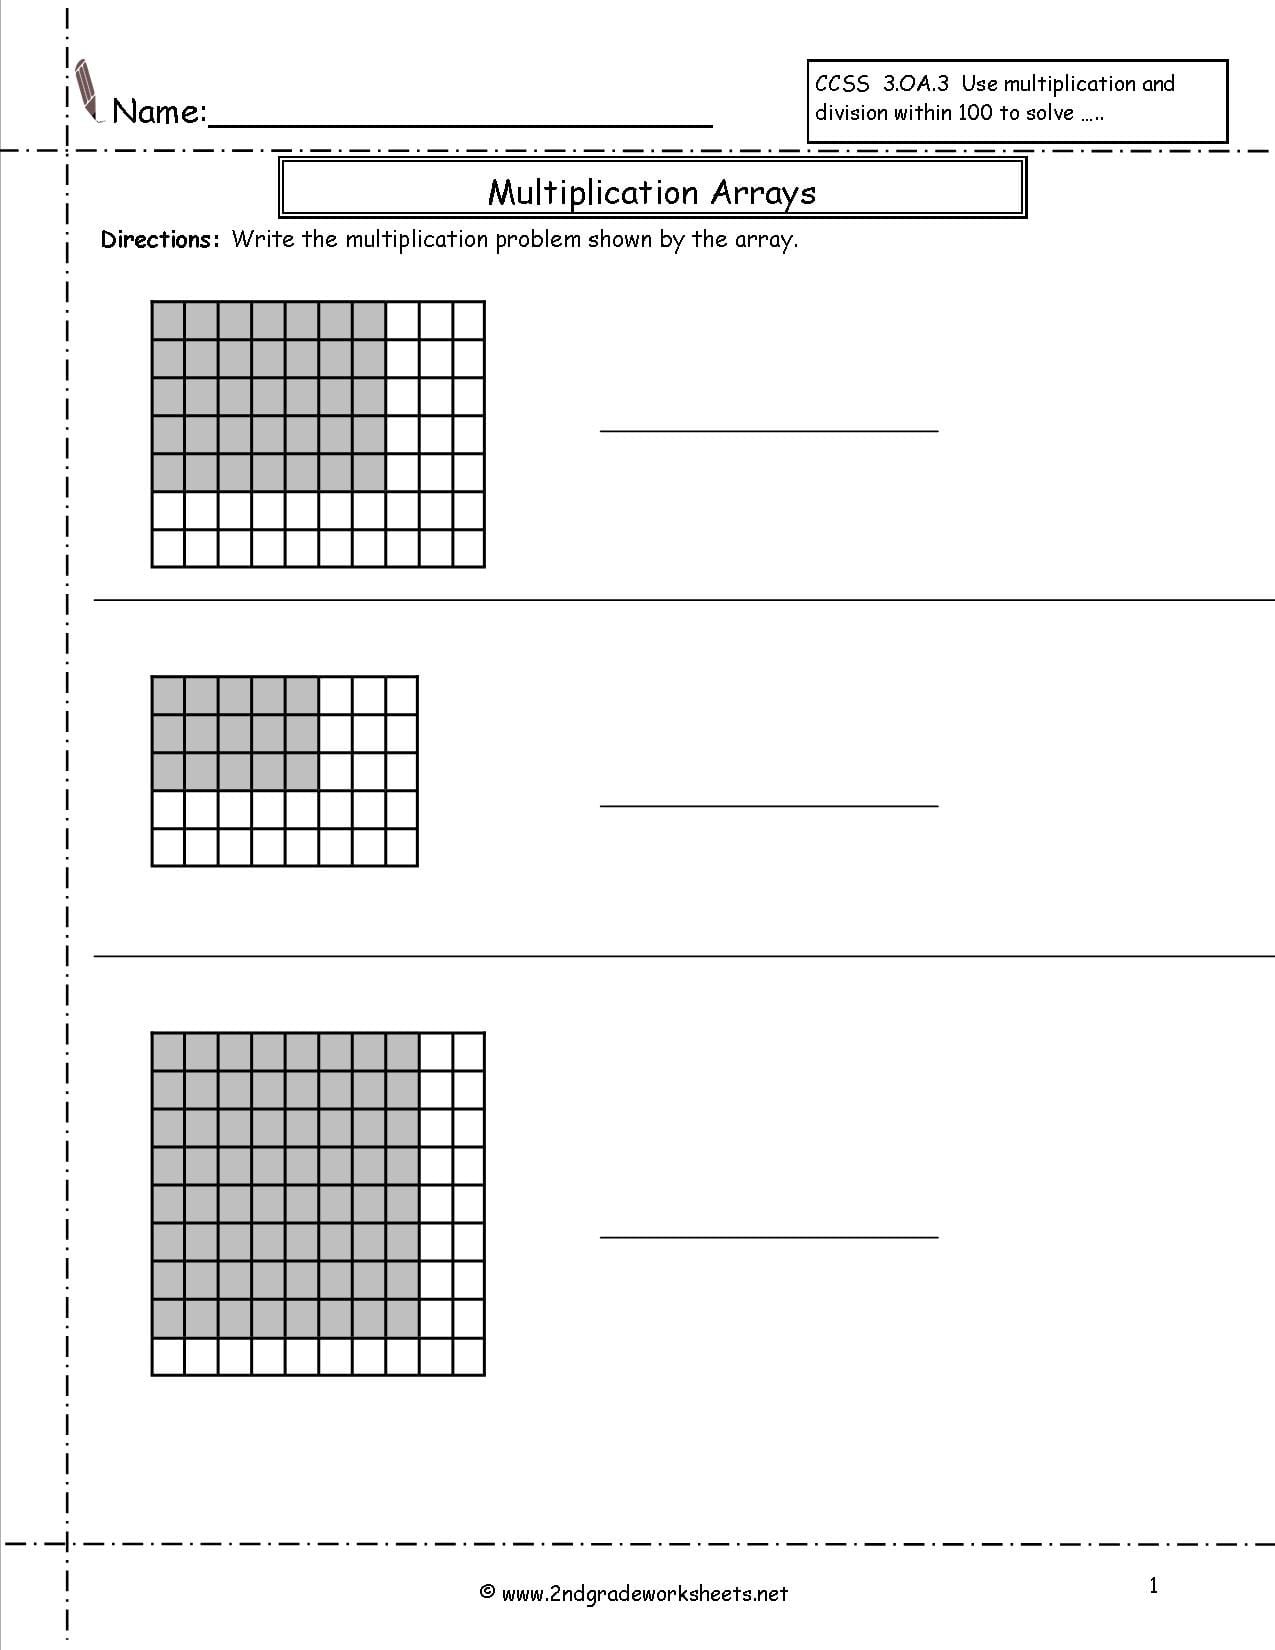 Multiplication Arrays Worksheets 4Th Grade Db excel